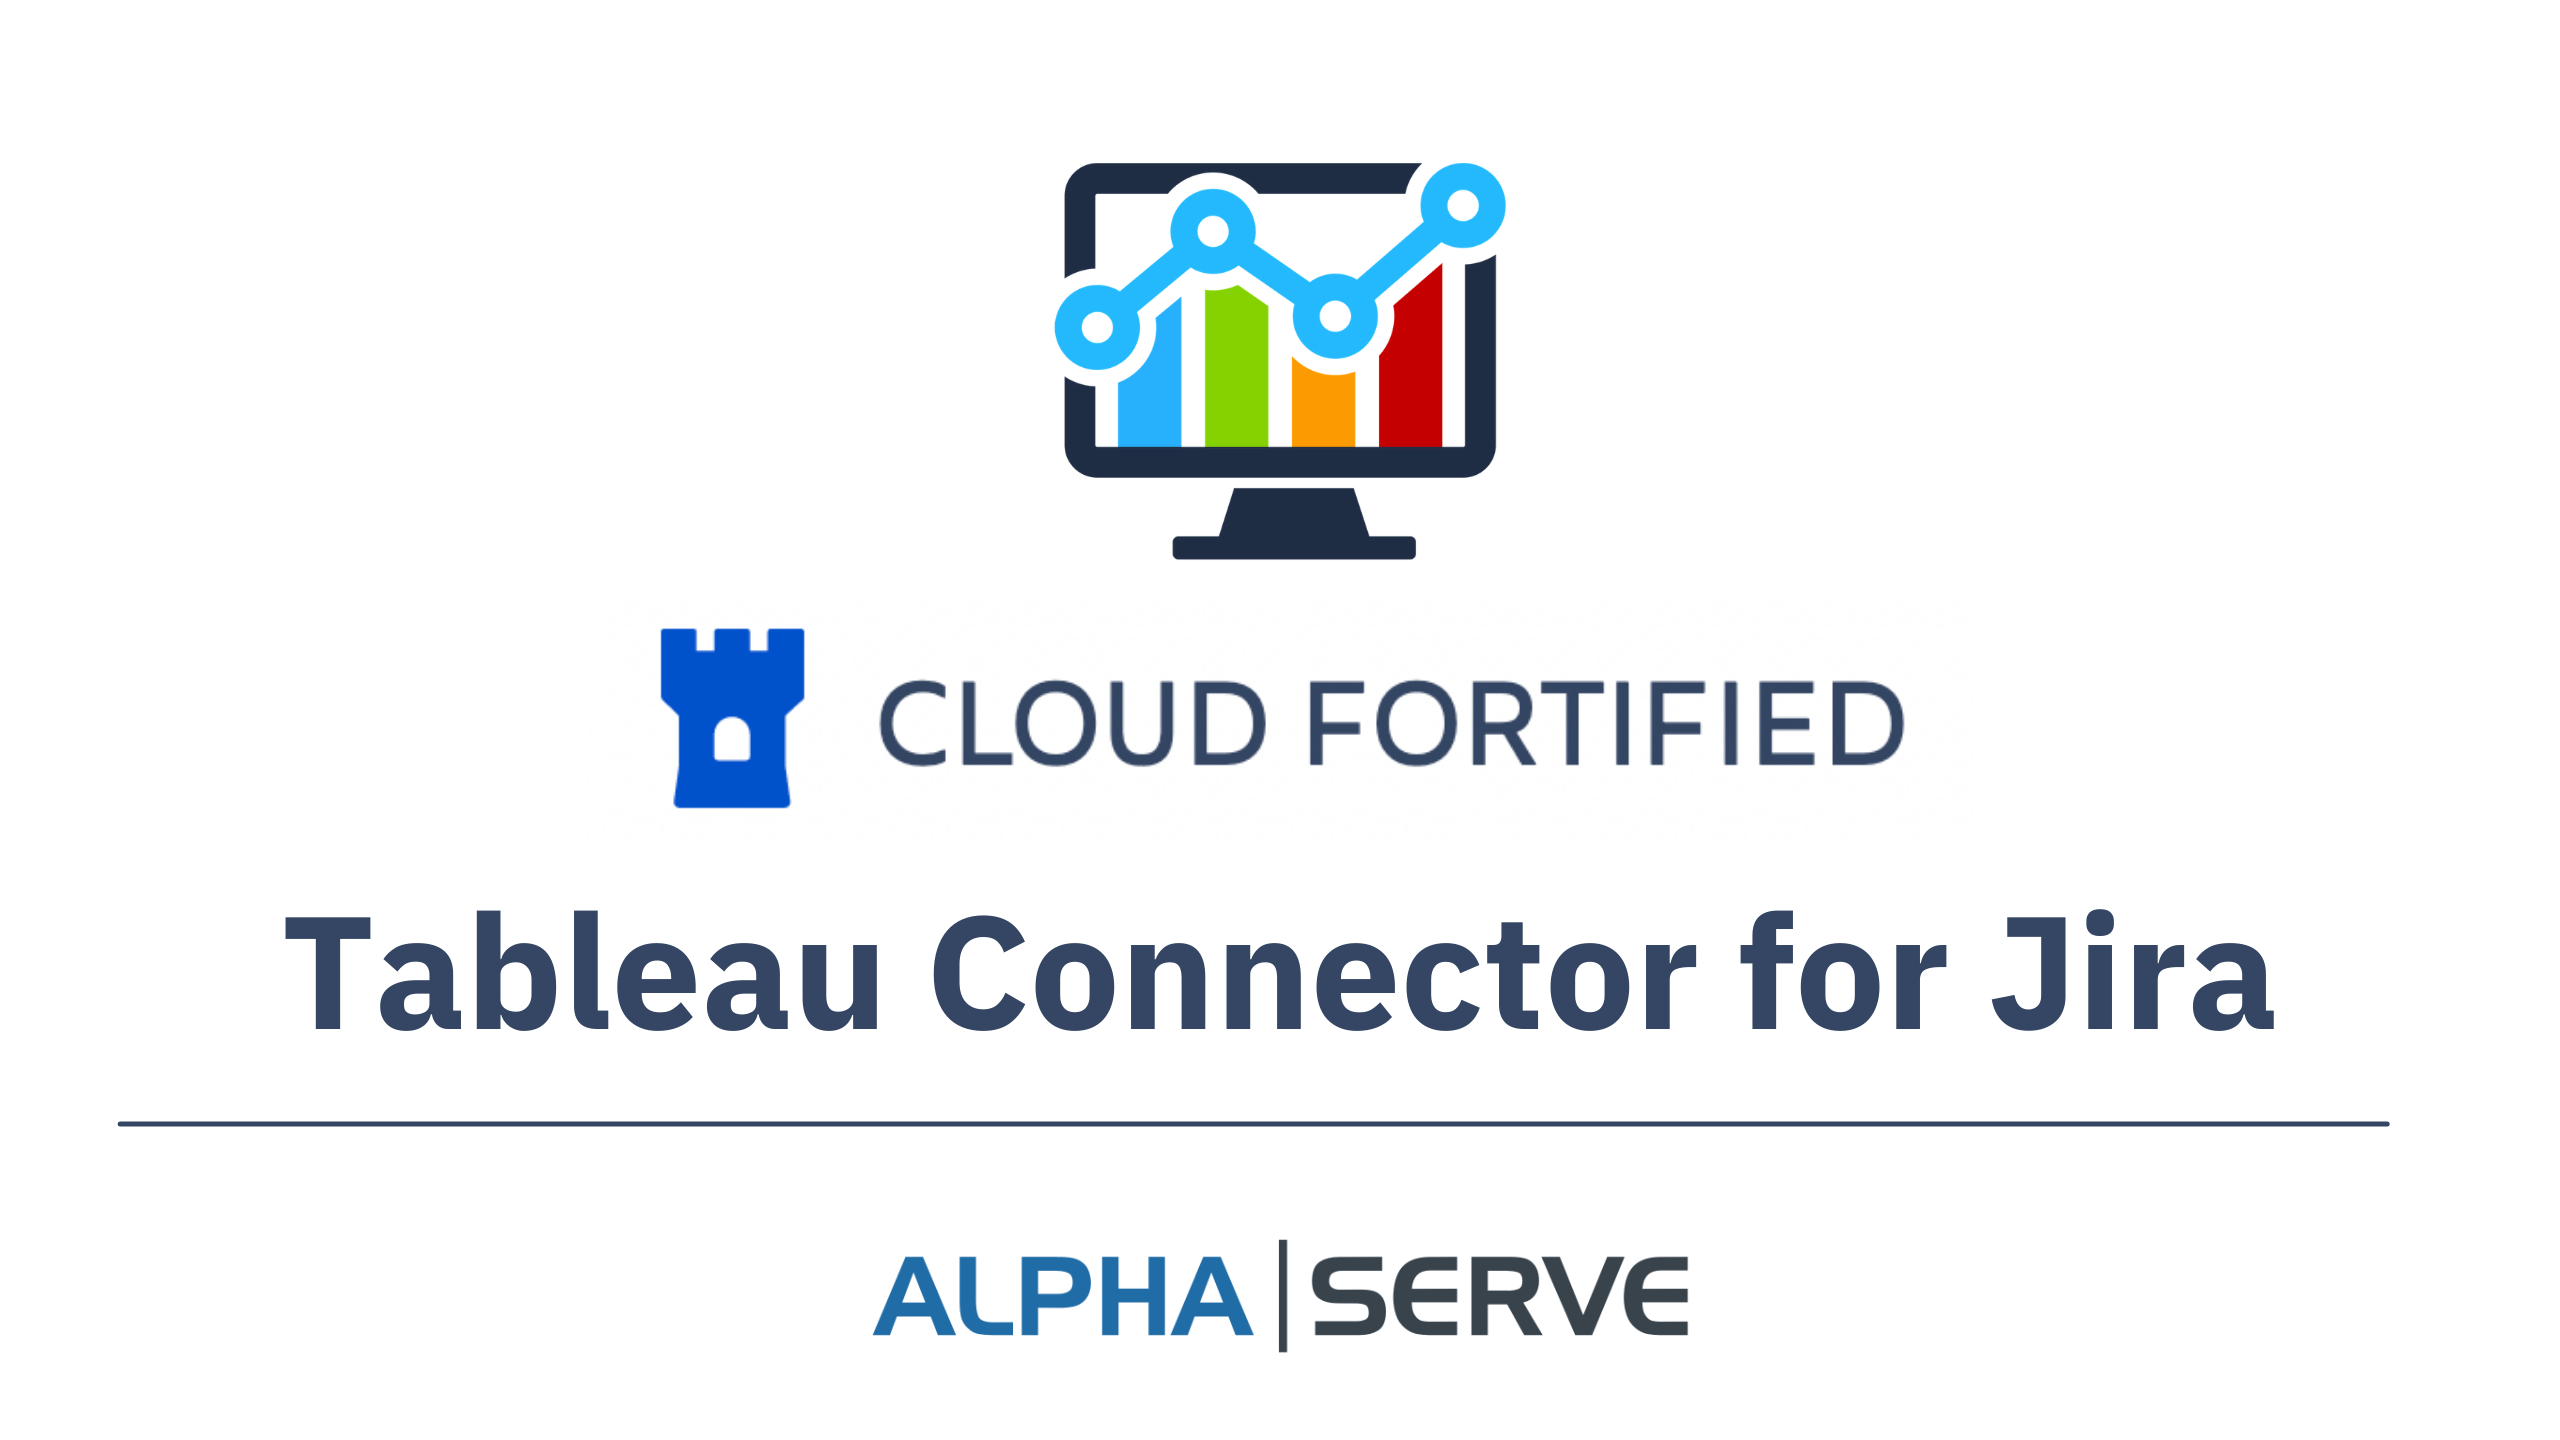 Tableau Connector for Jira is Now an Atlassian Cloud Fortified App